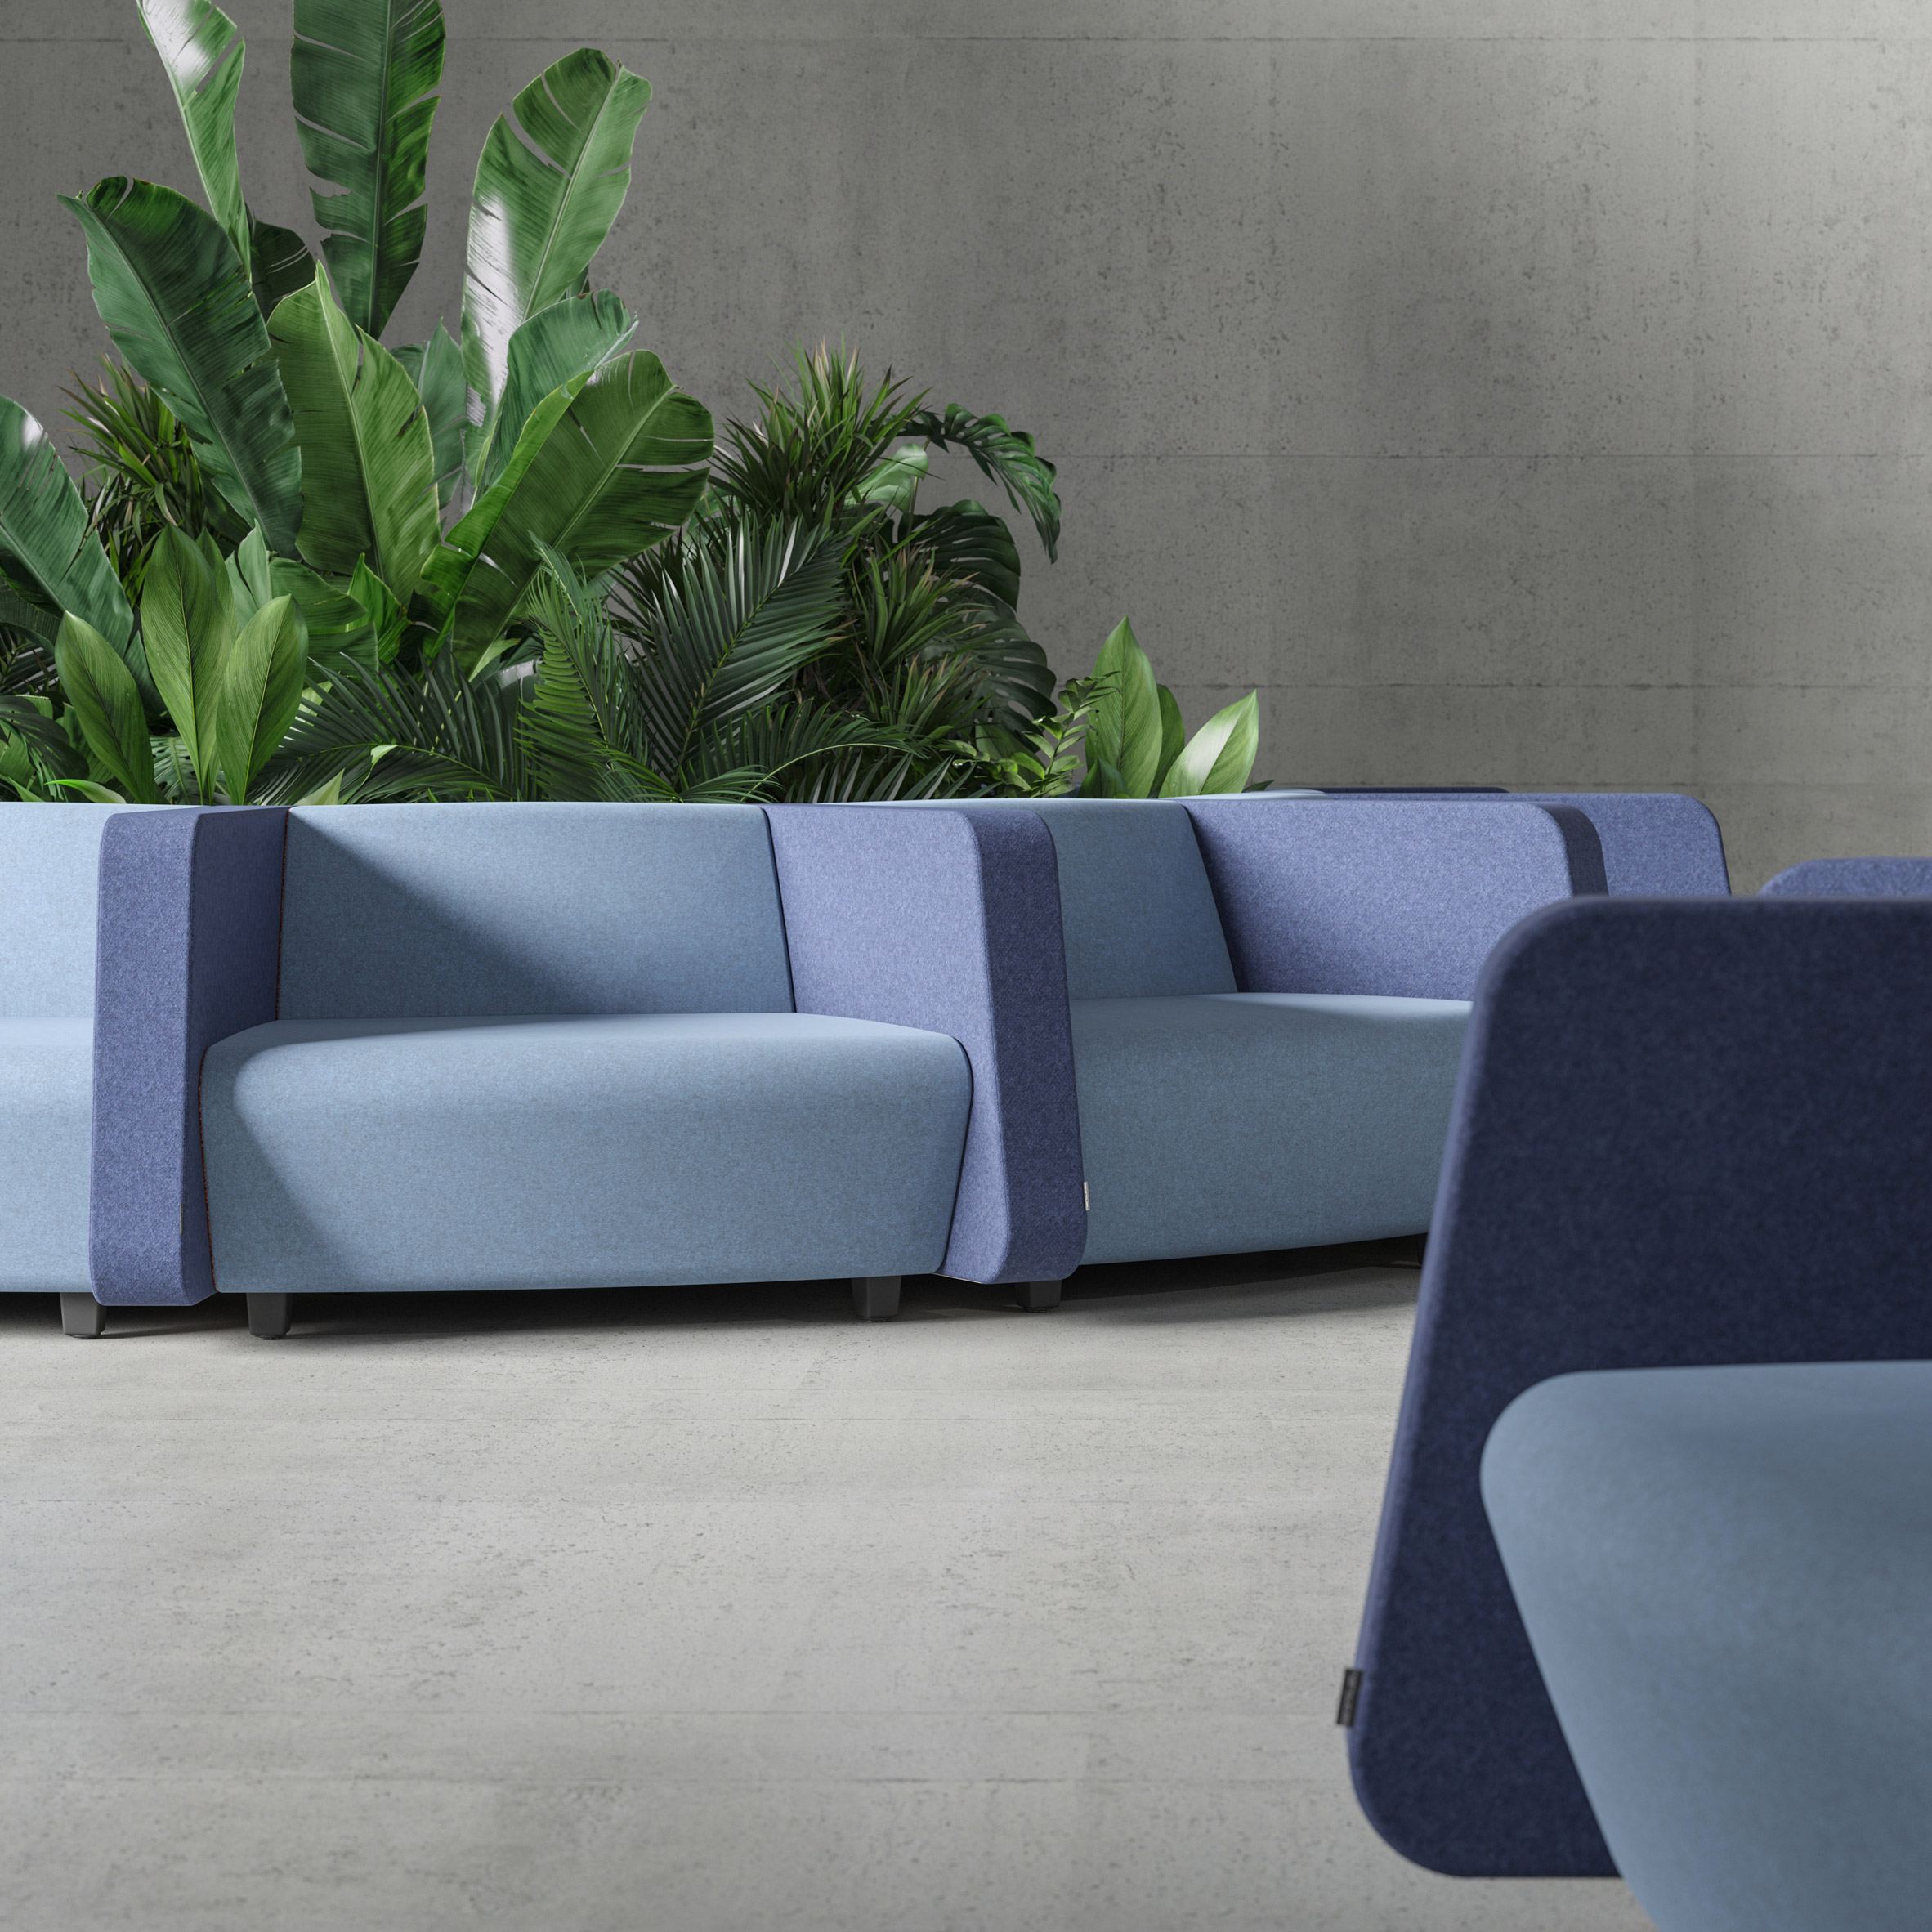 Soft Rock modular sofa system by Strand + Hvass for Narbutas